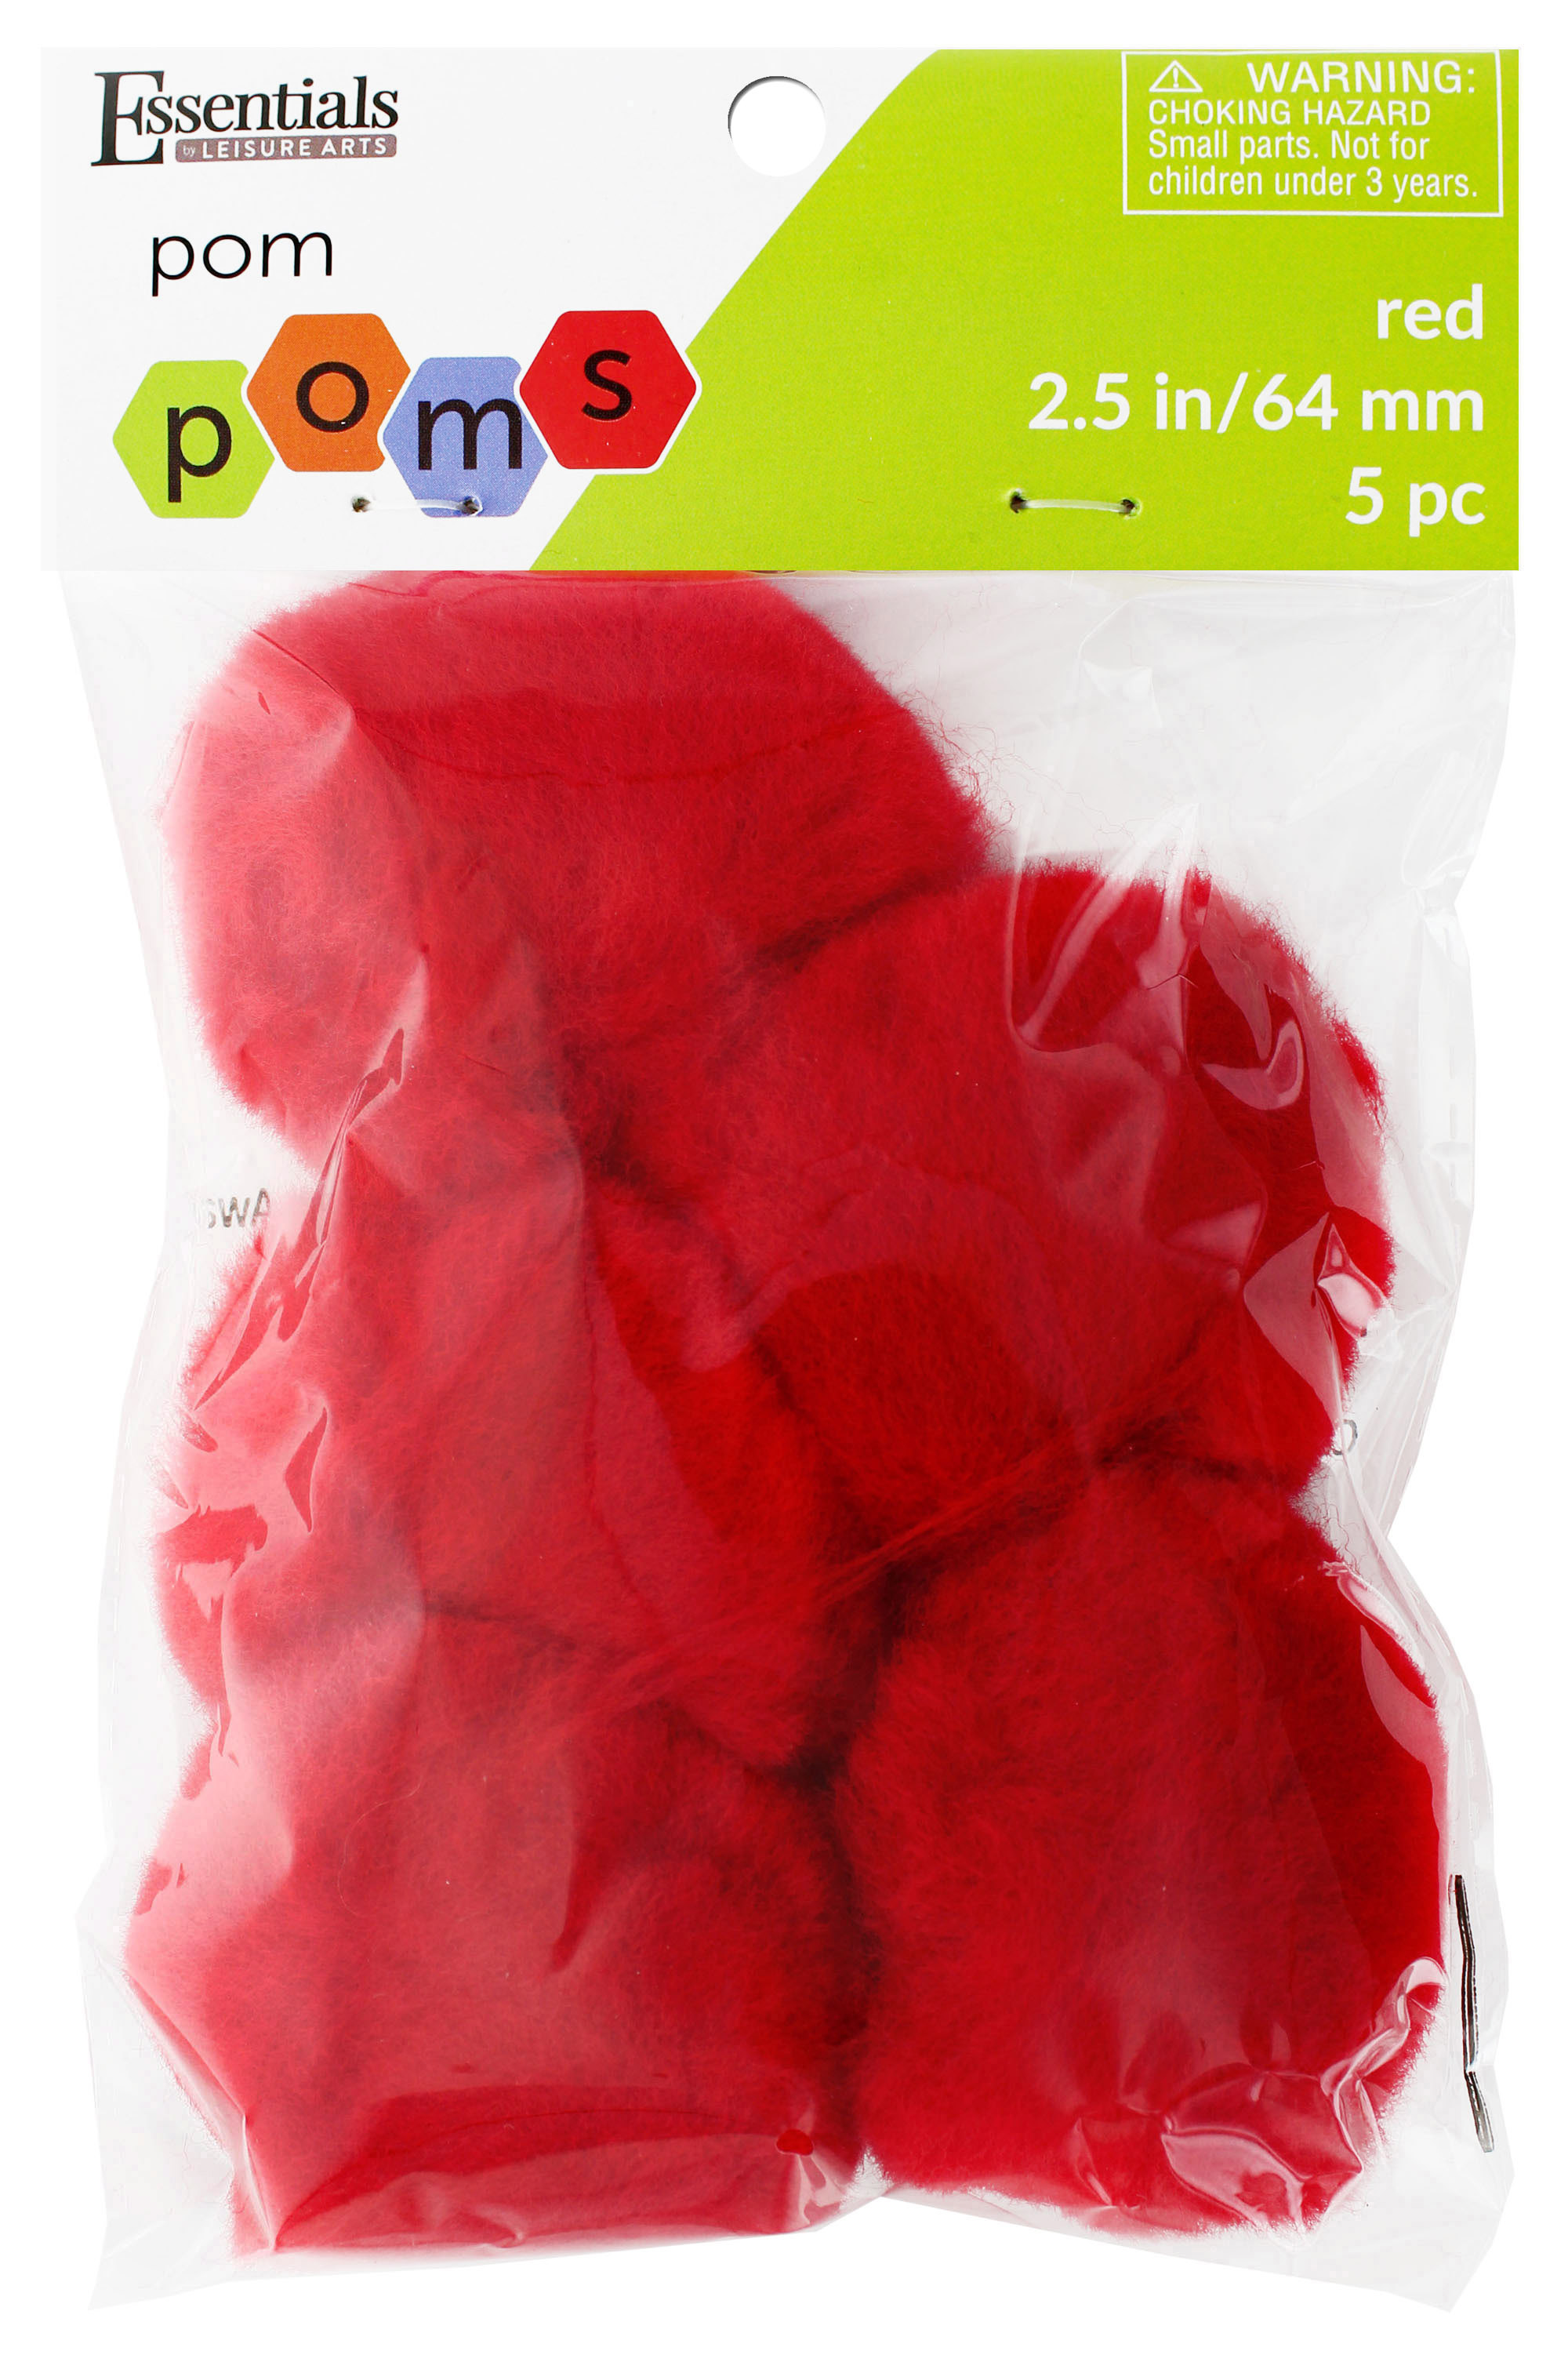 Essentials by Leisure Pom Pom 2.5 inch Red 5pc